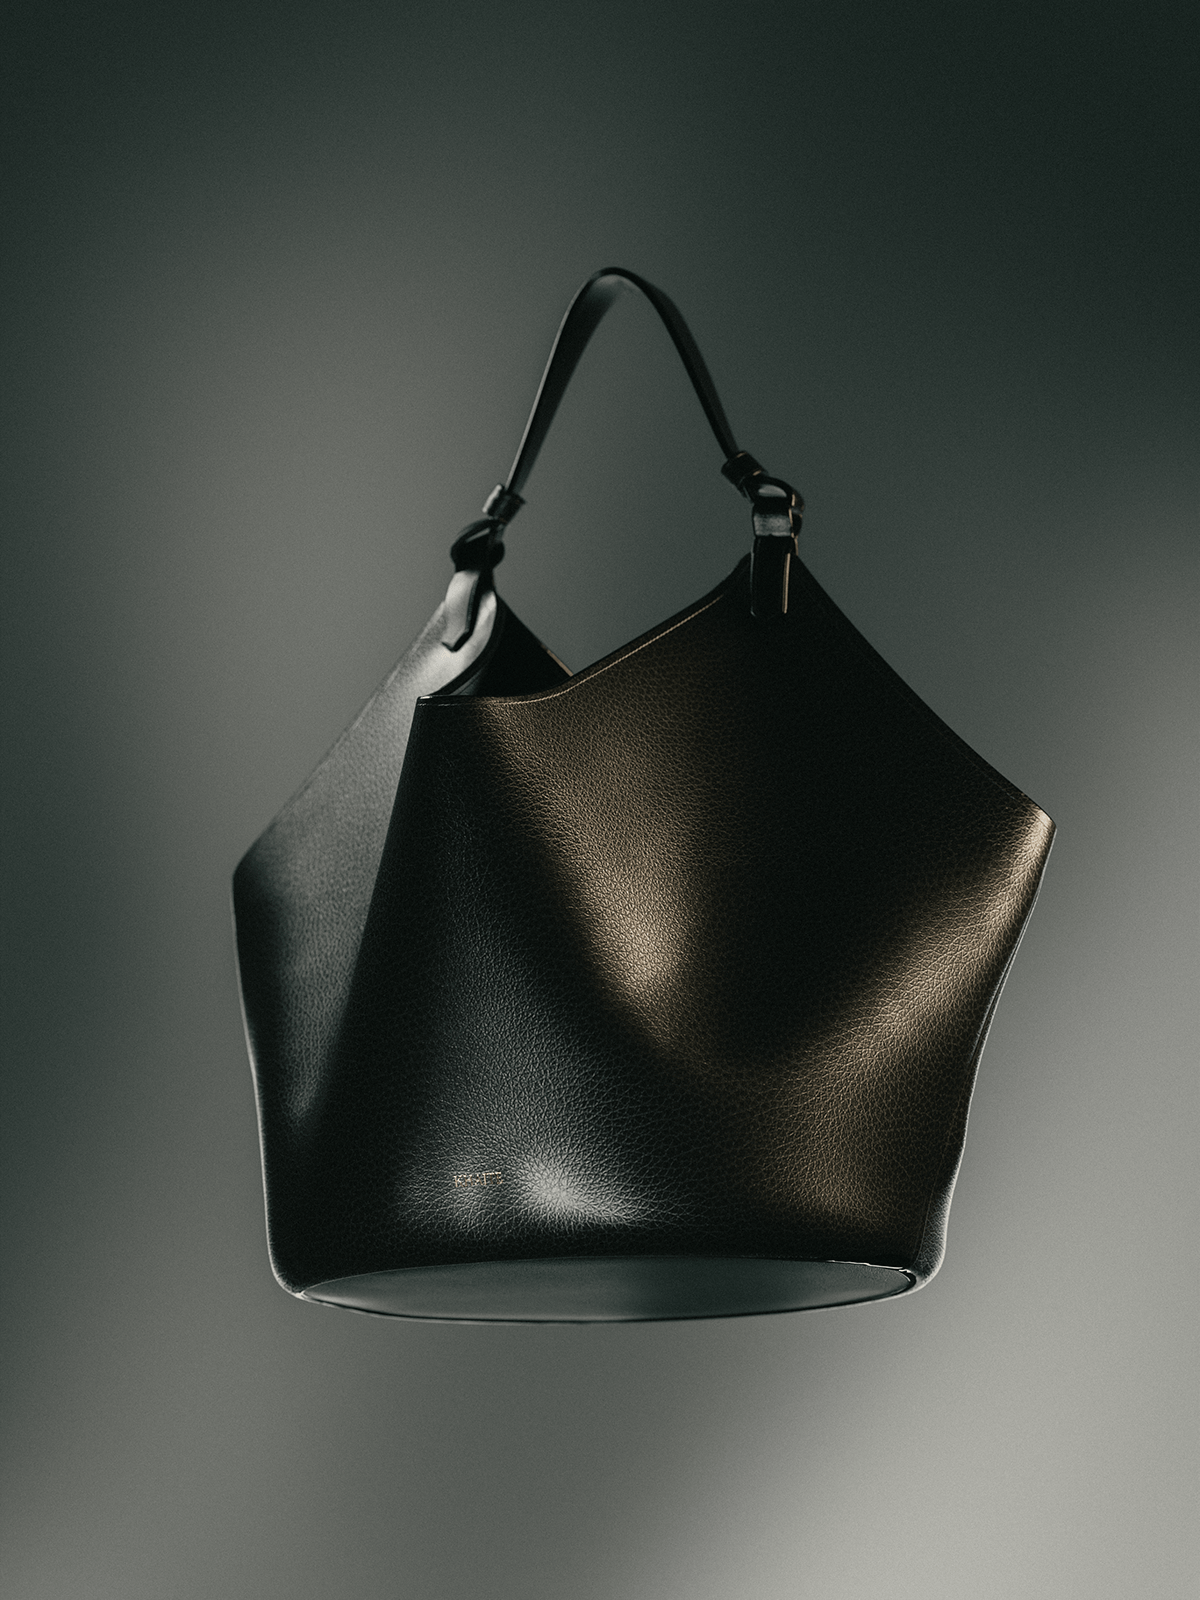 CGIArtist handbag 3D Visualization Render visualization 3D modern bag Khaite